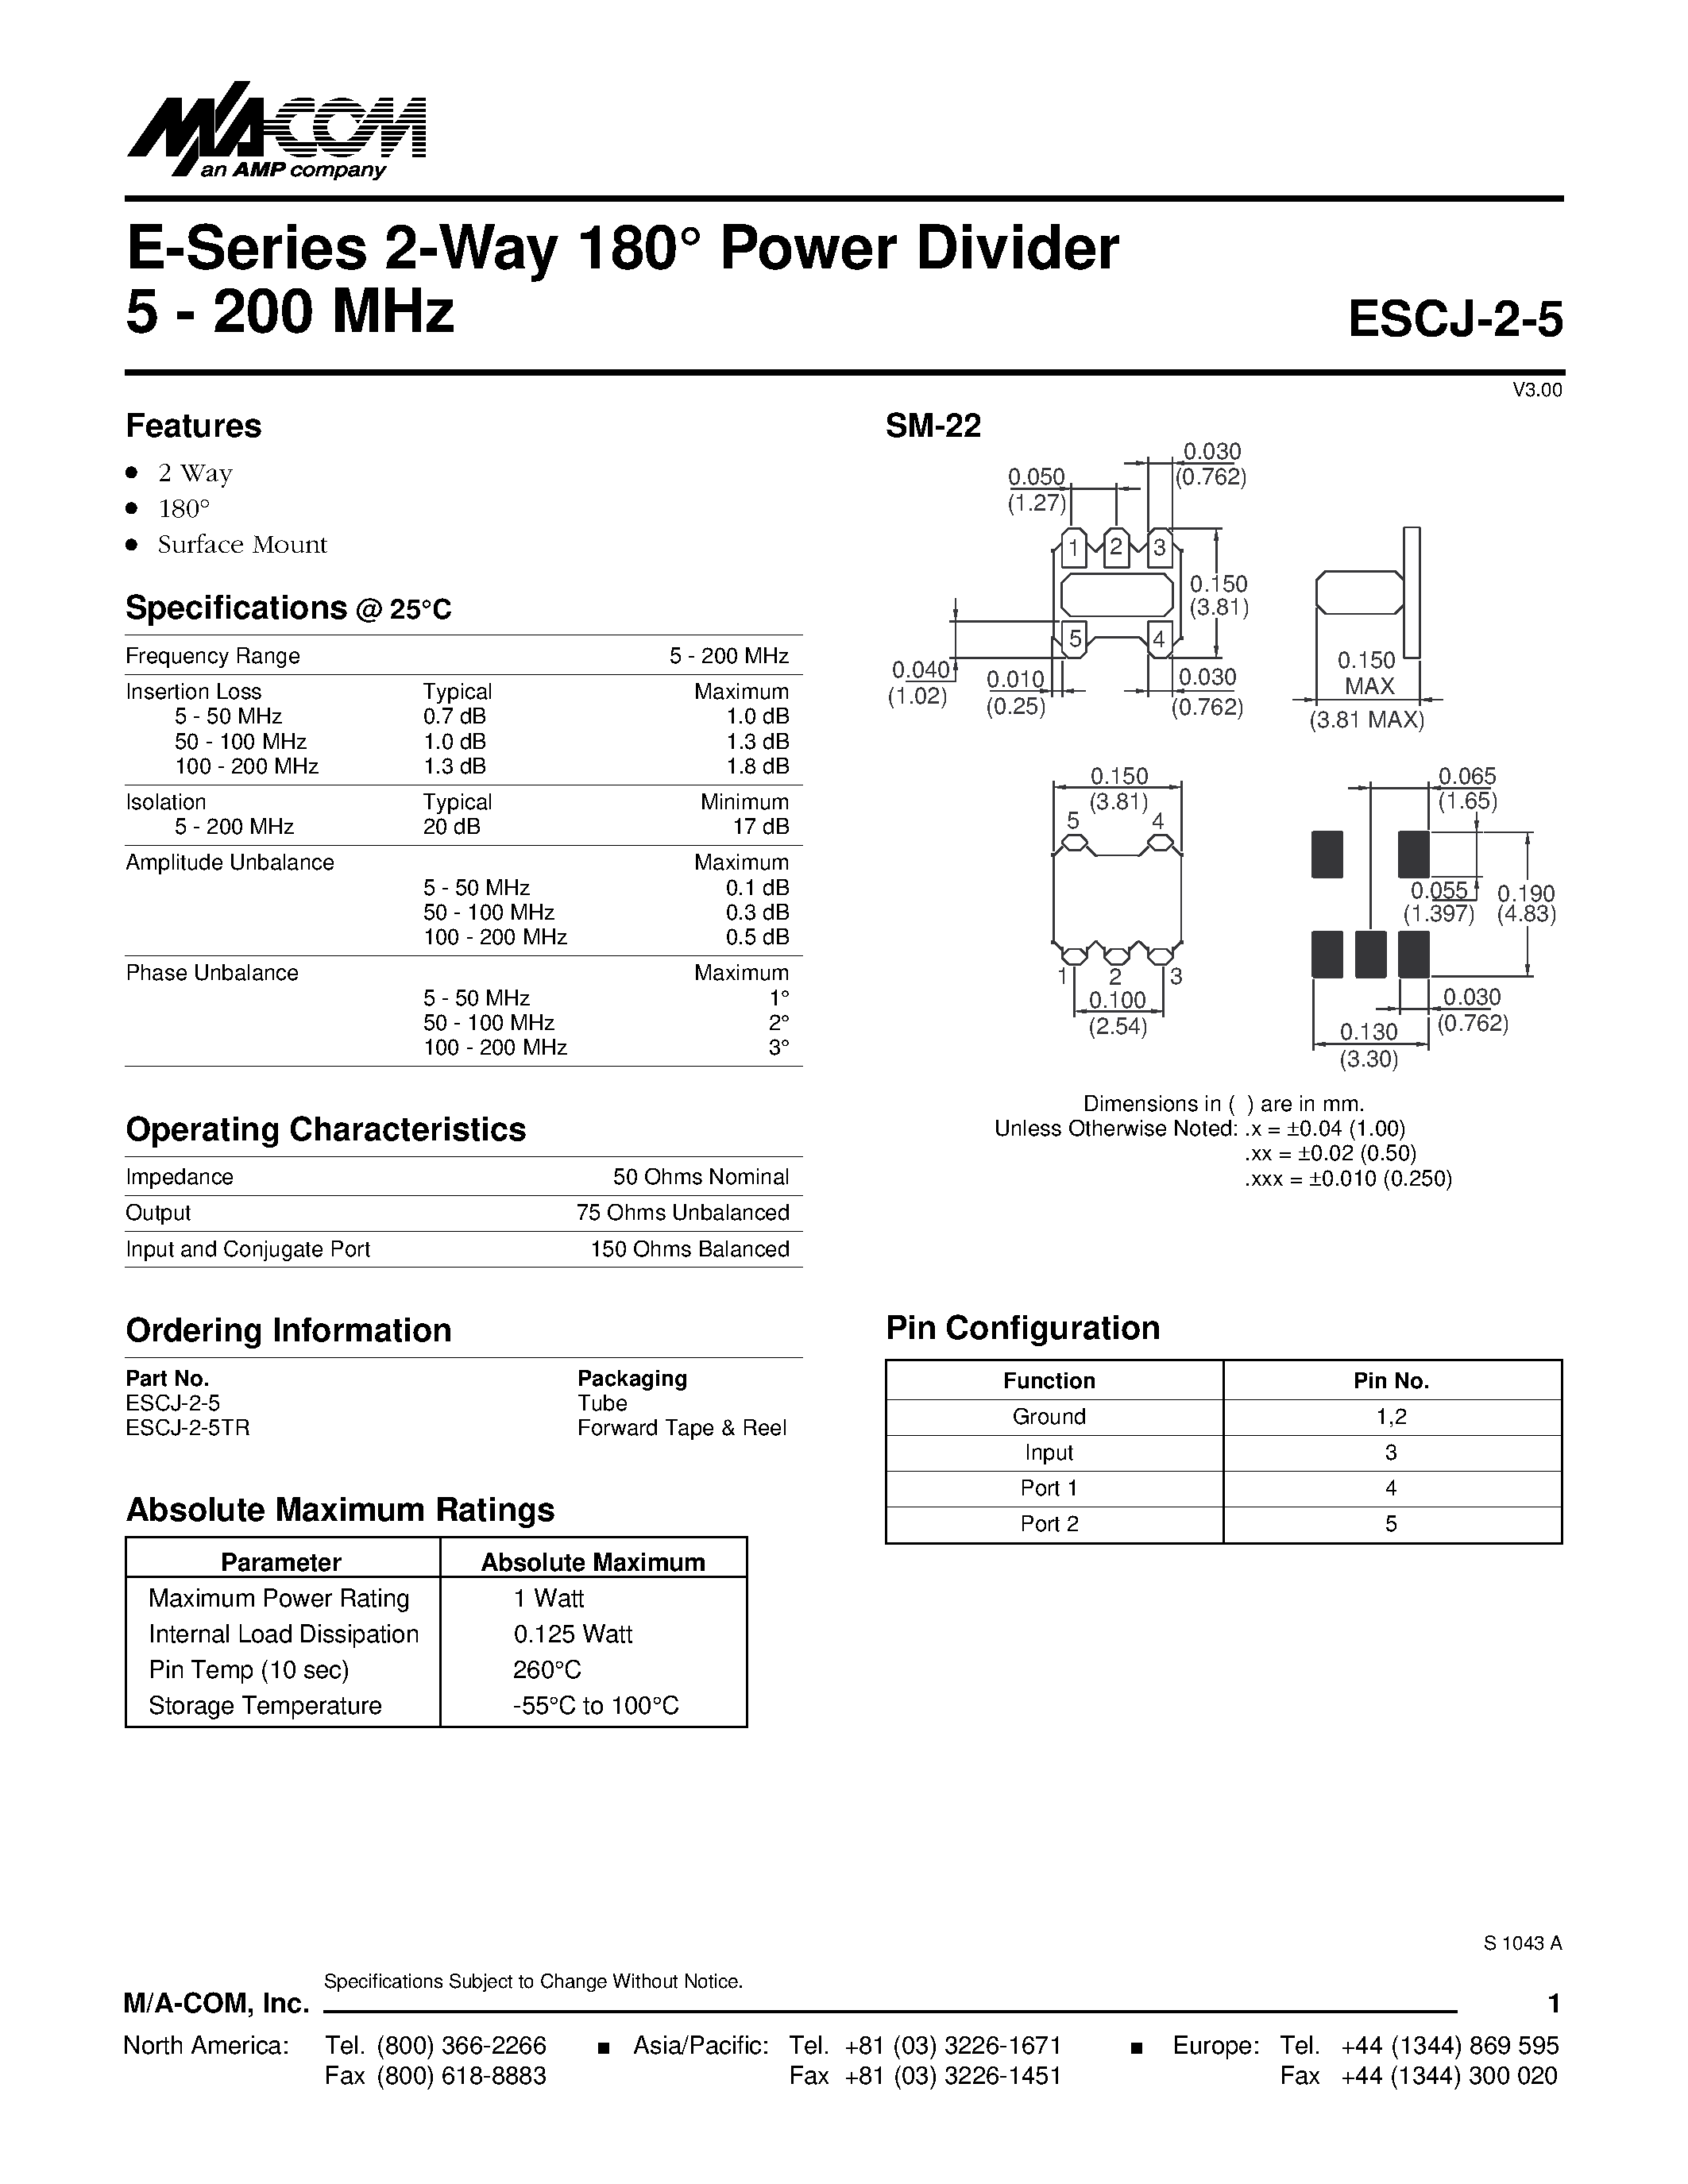 Datasheet ESCJ-2-5 - E-Series 2-Way 180 Power Divider 5 - 200 MHz page 1